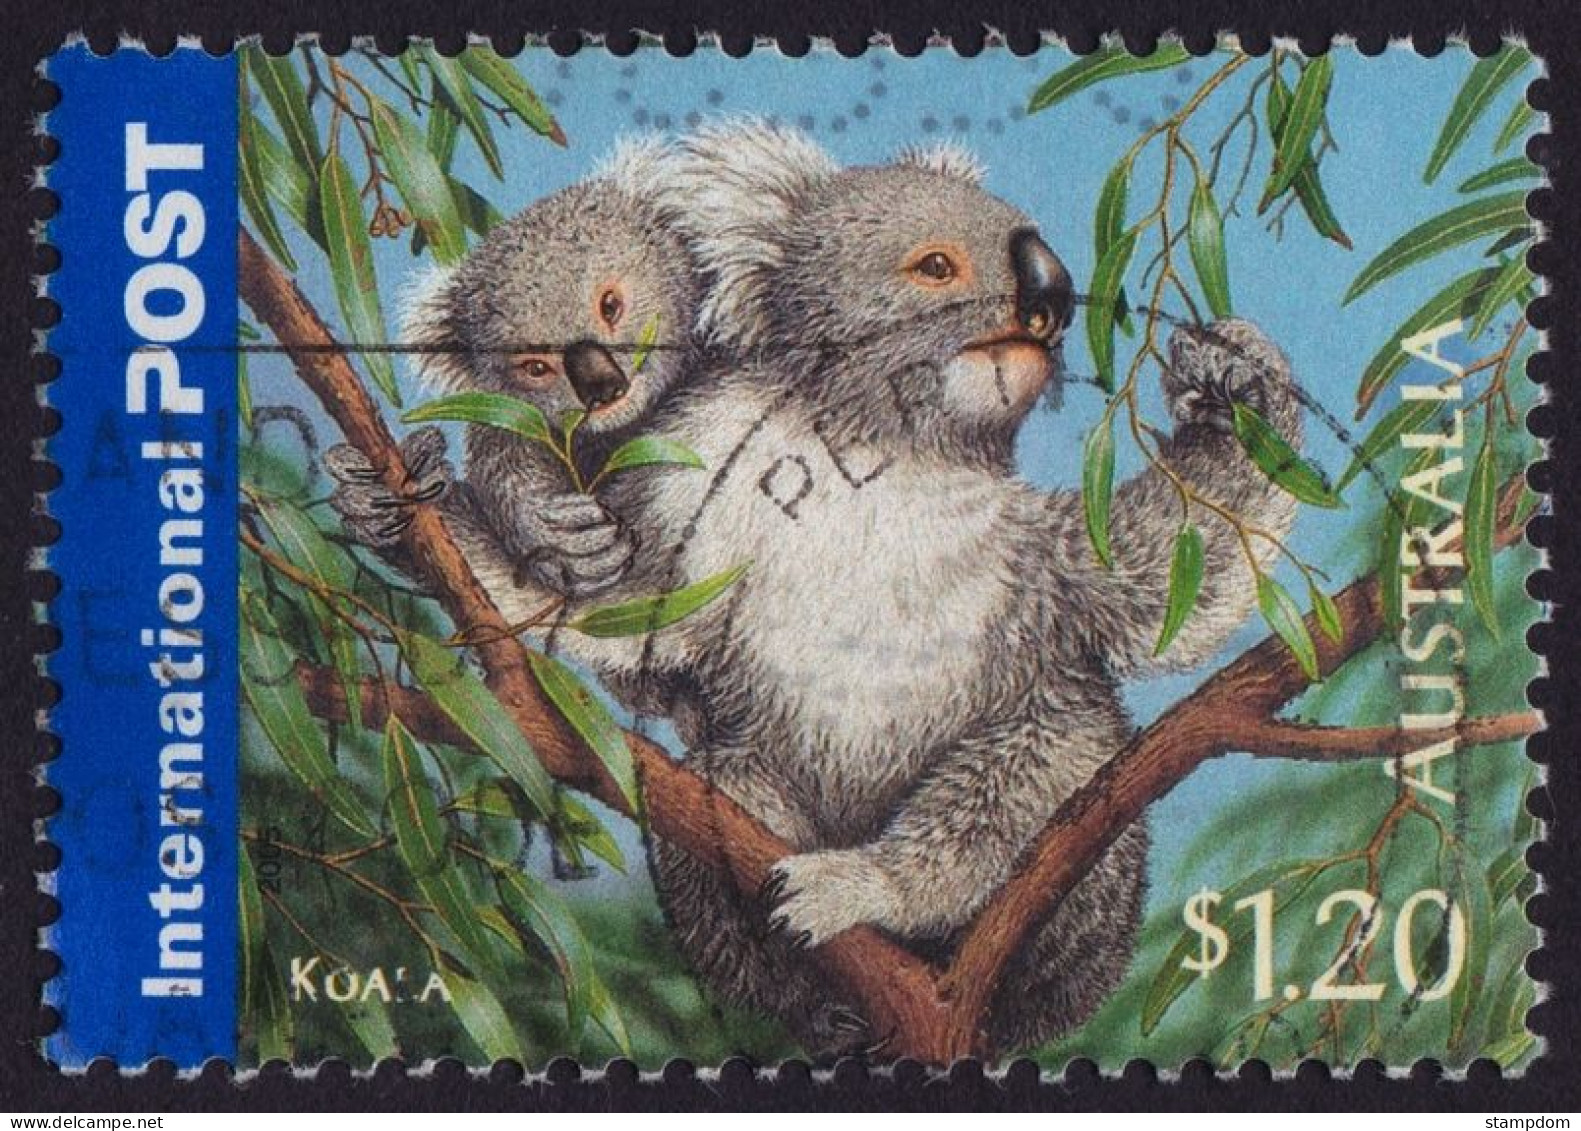 AUSTRALIA  2005 Animals Int'l Post $1.20 Koala Sc#2388 USED @O414 - Usati